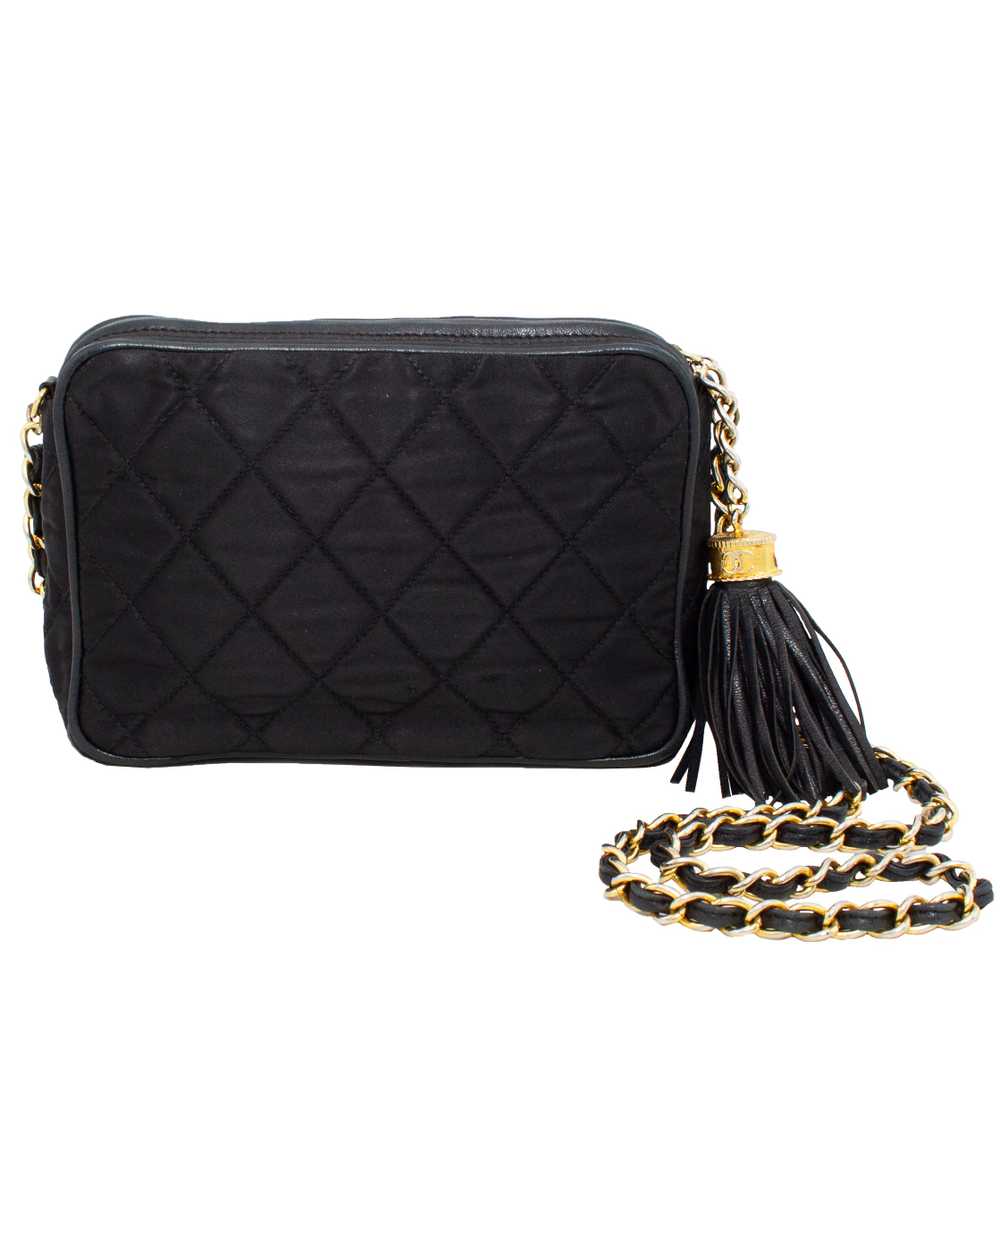 Chanel Black Satin Quilted Evening Bag - image 1